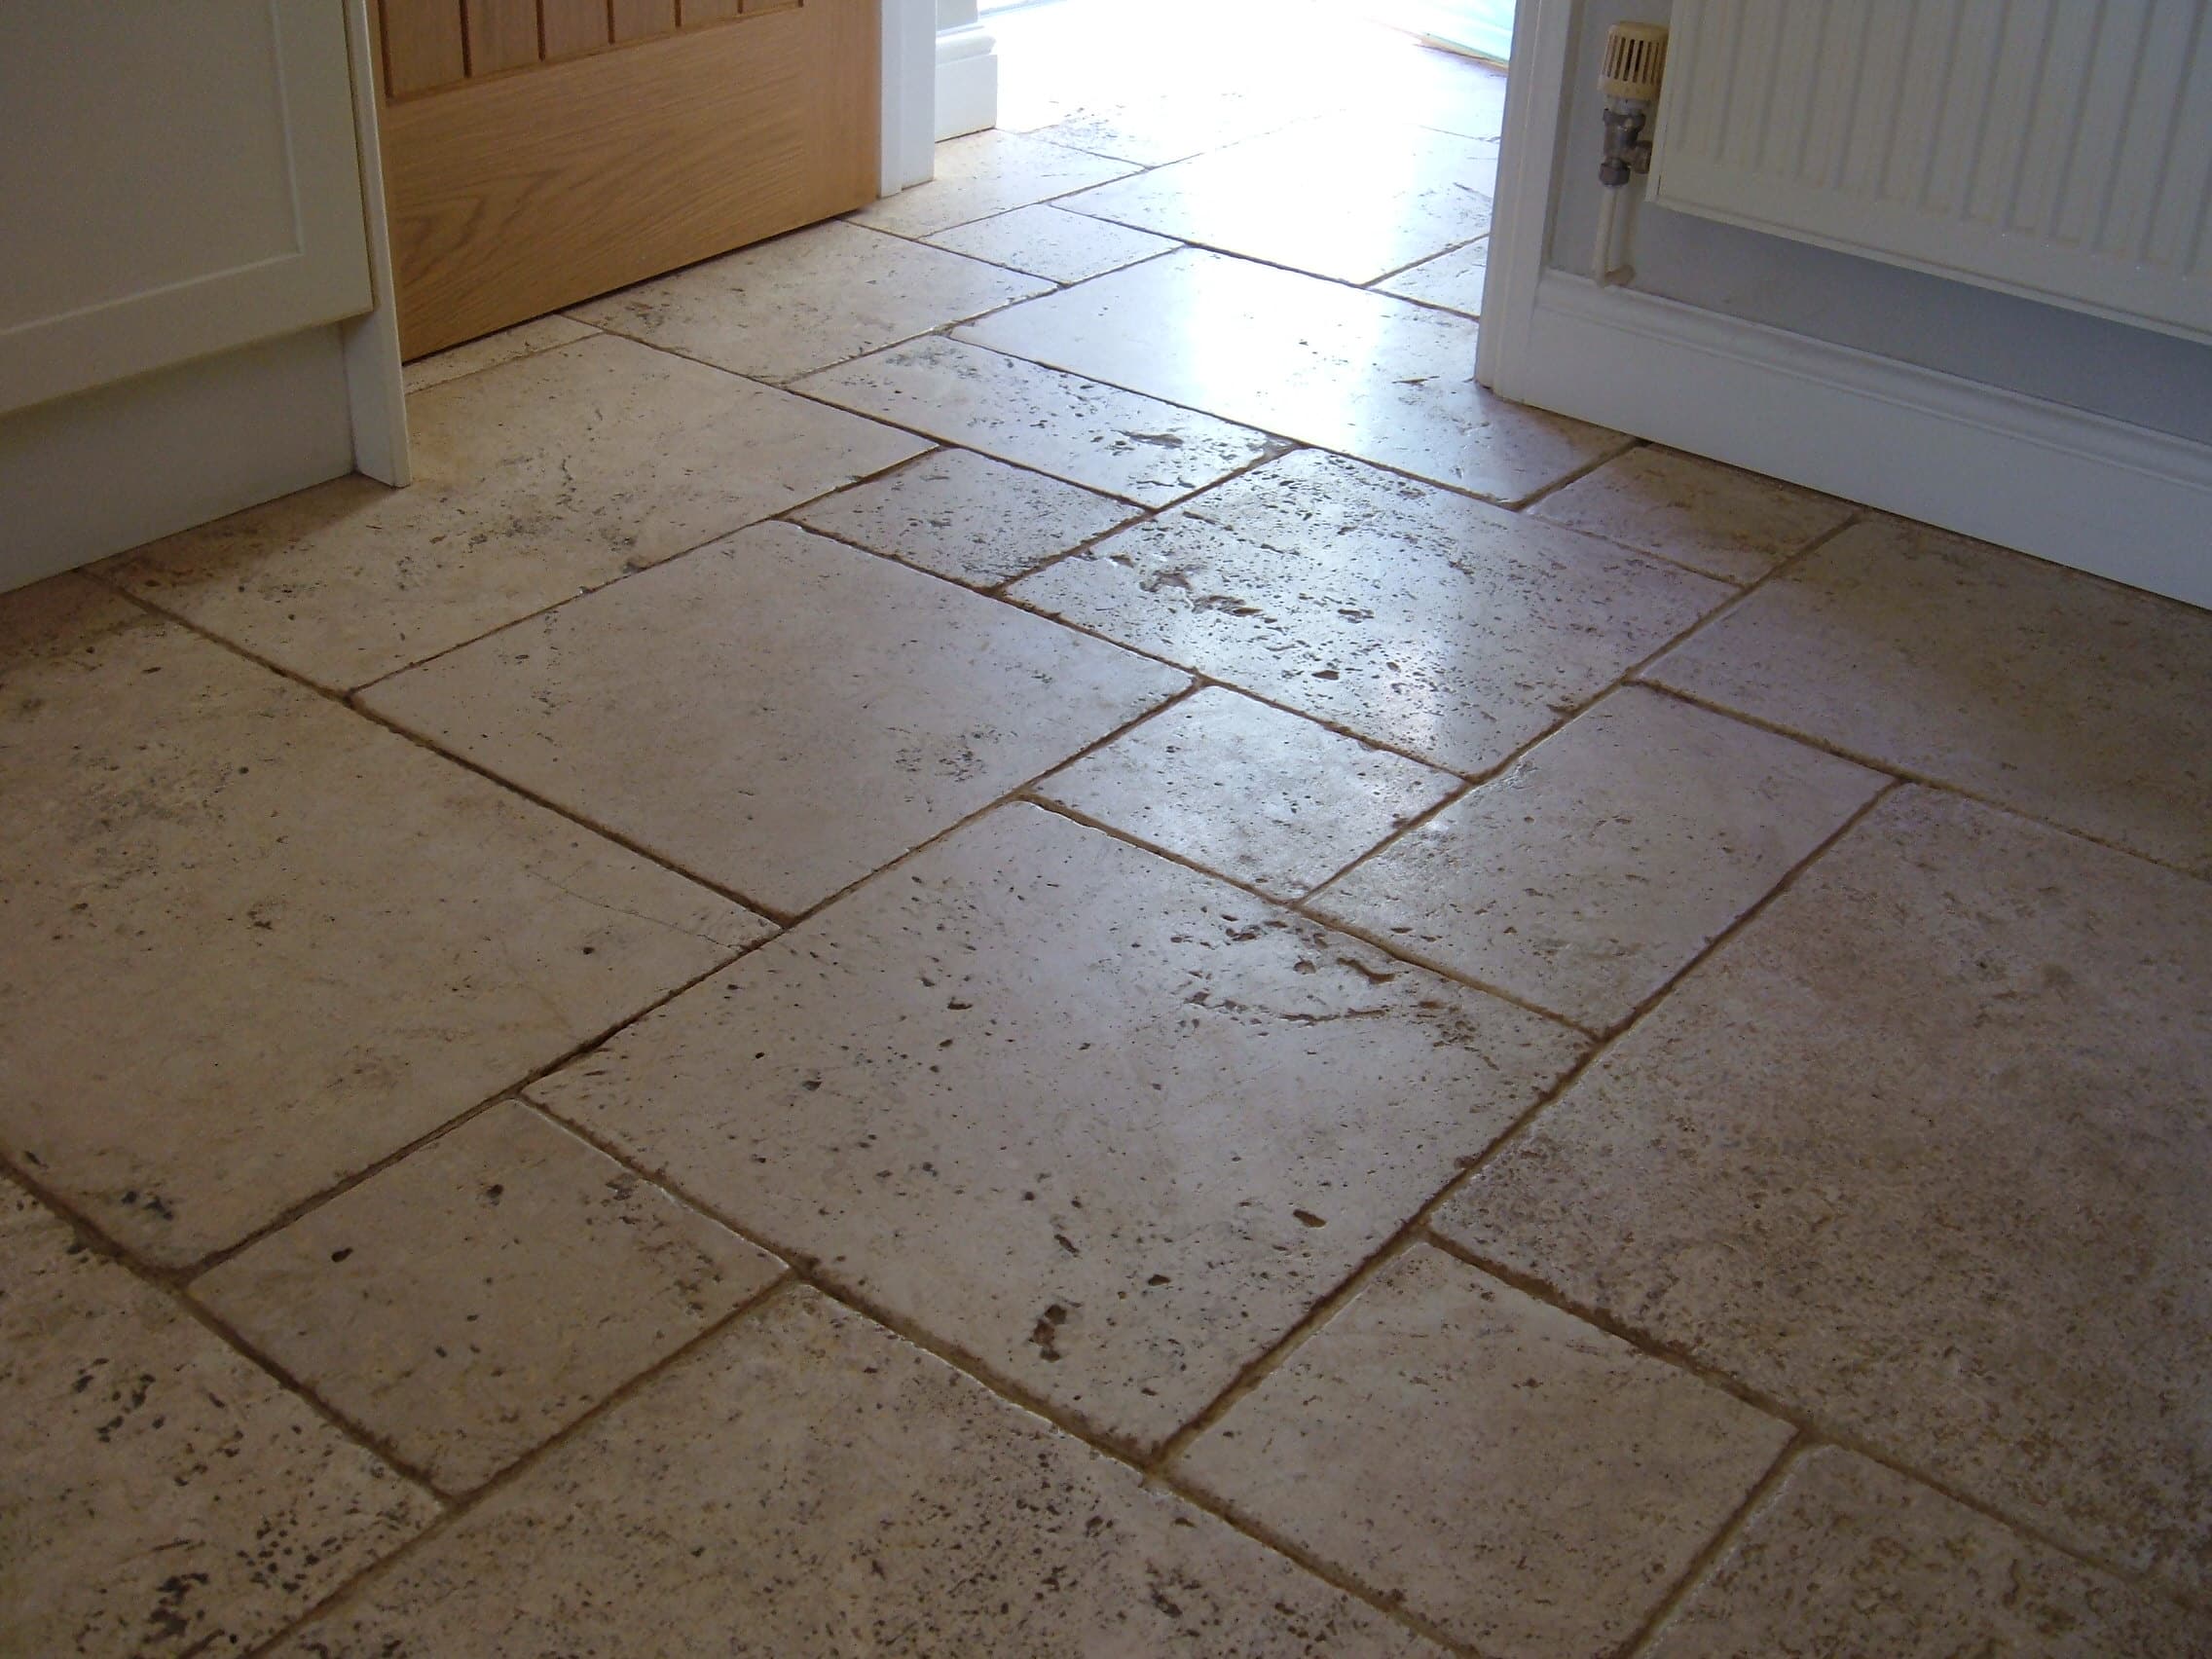 Travertine Floor in Attleborough Before Cleaning